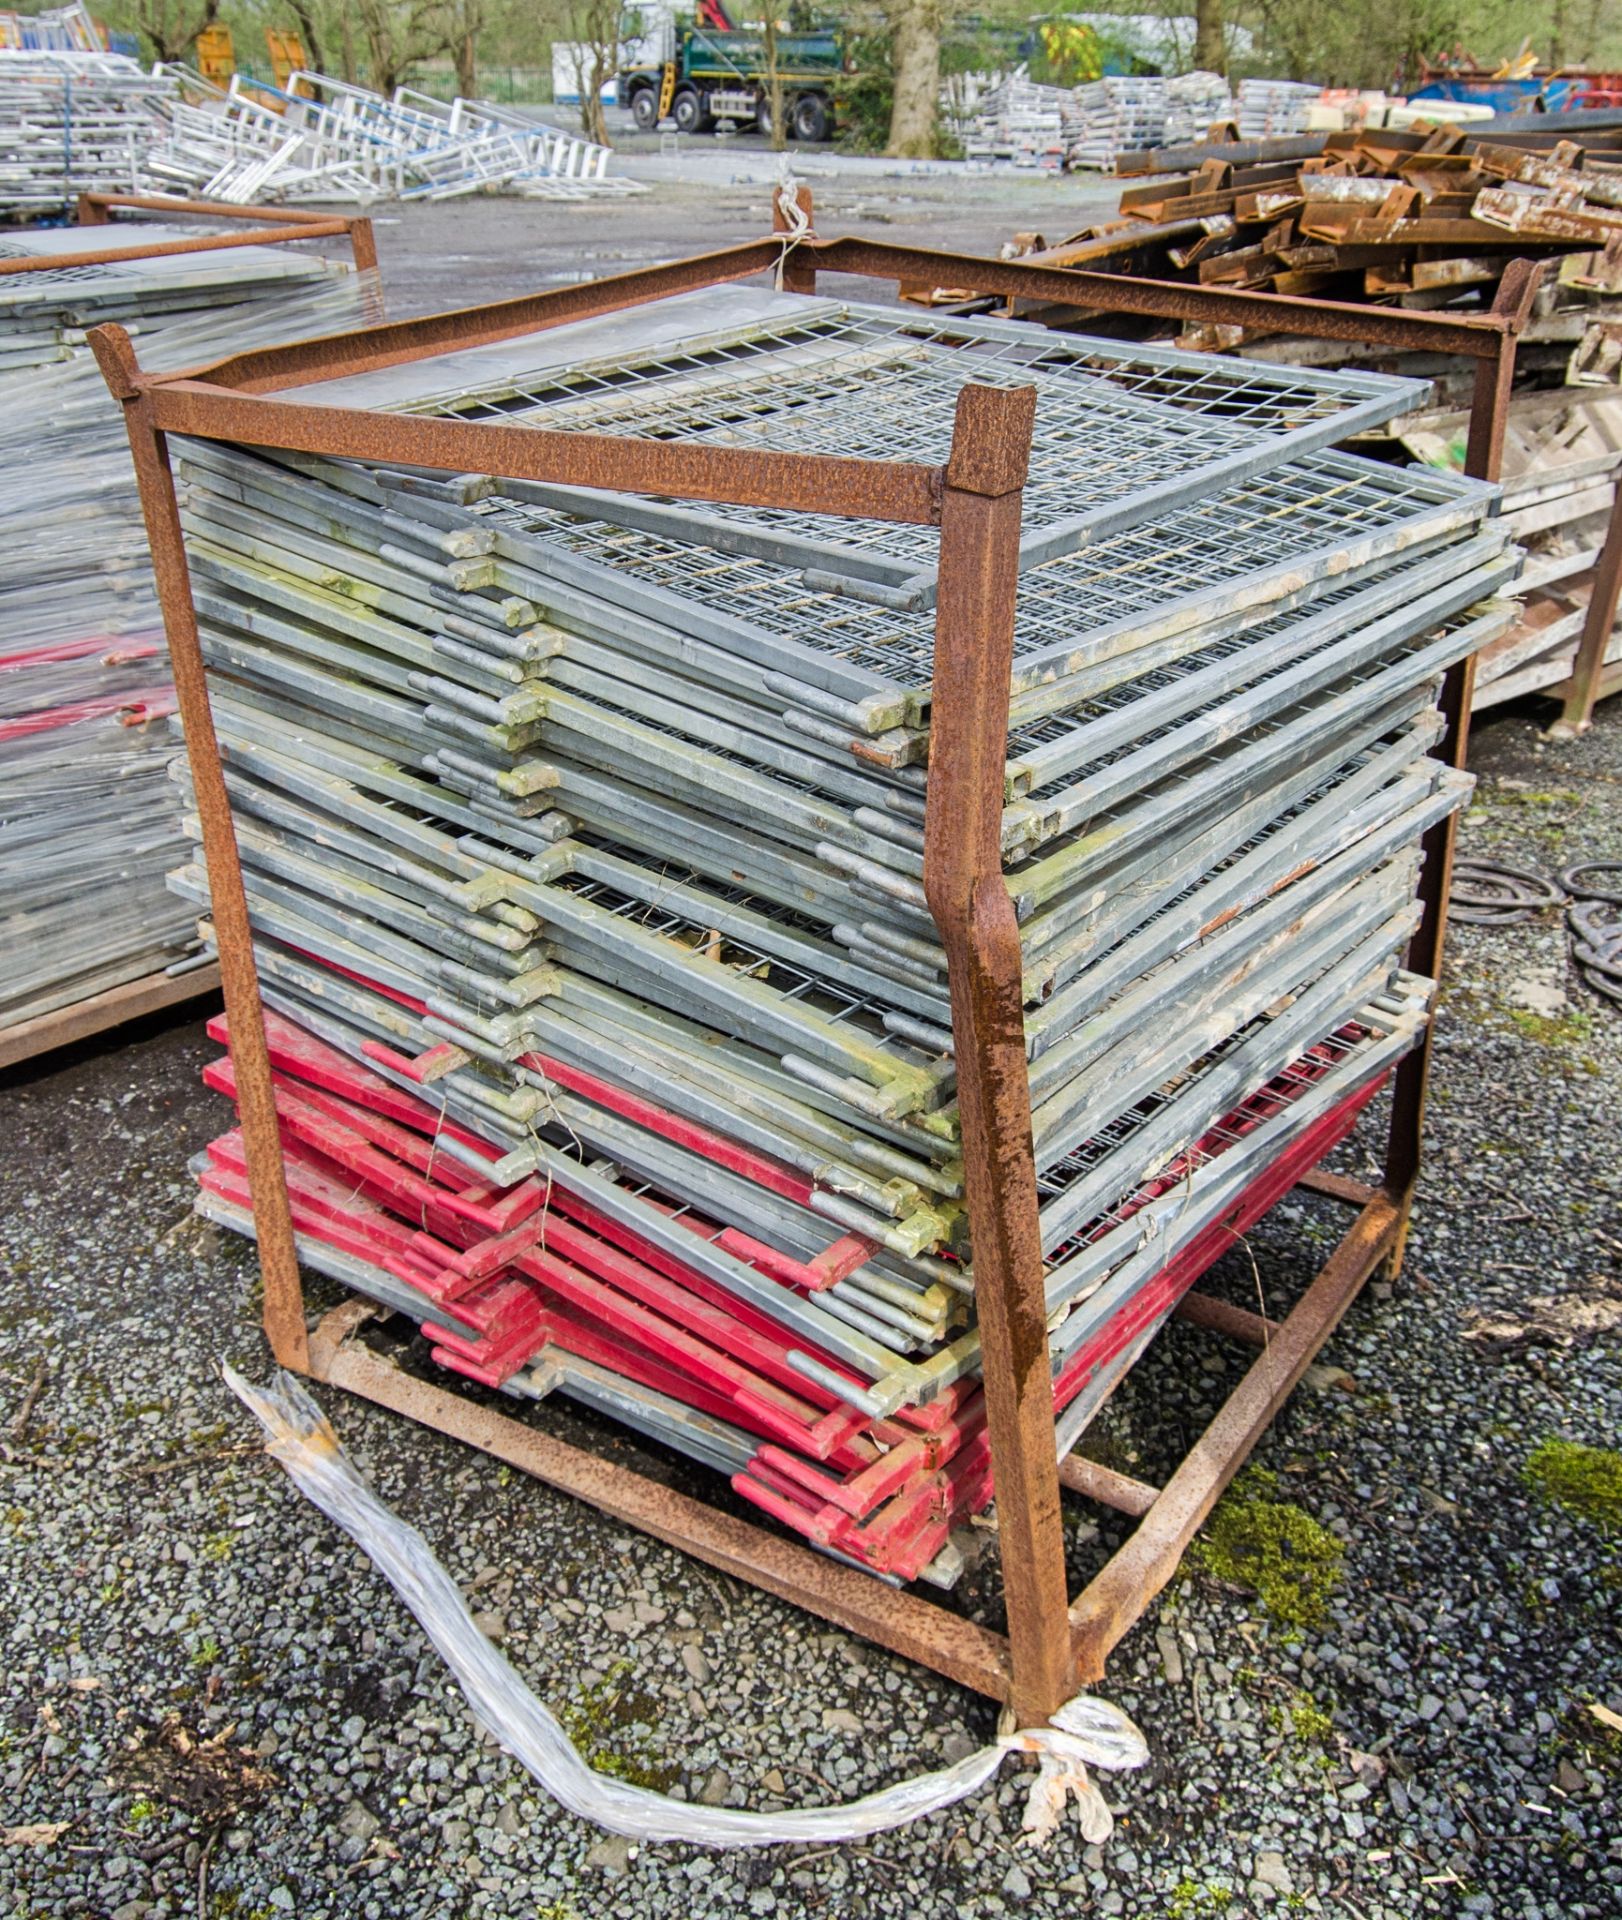 Stillage of approximately 50 100cm x 85cm mesh safety panels